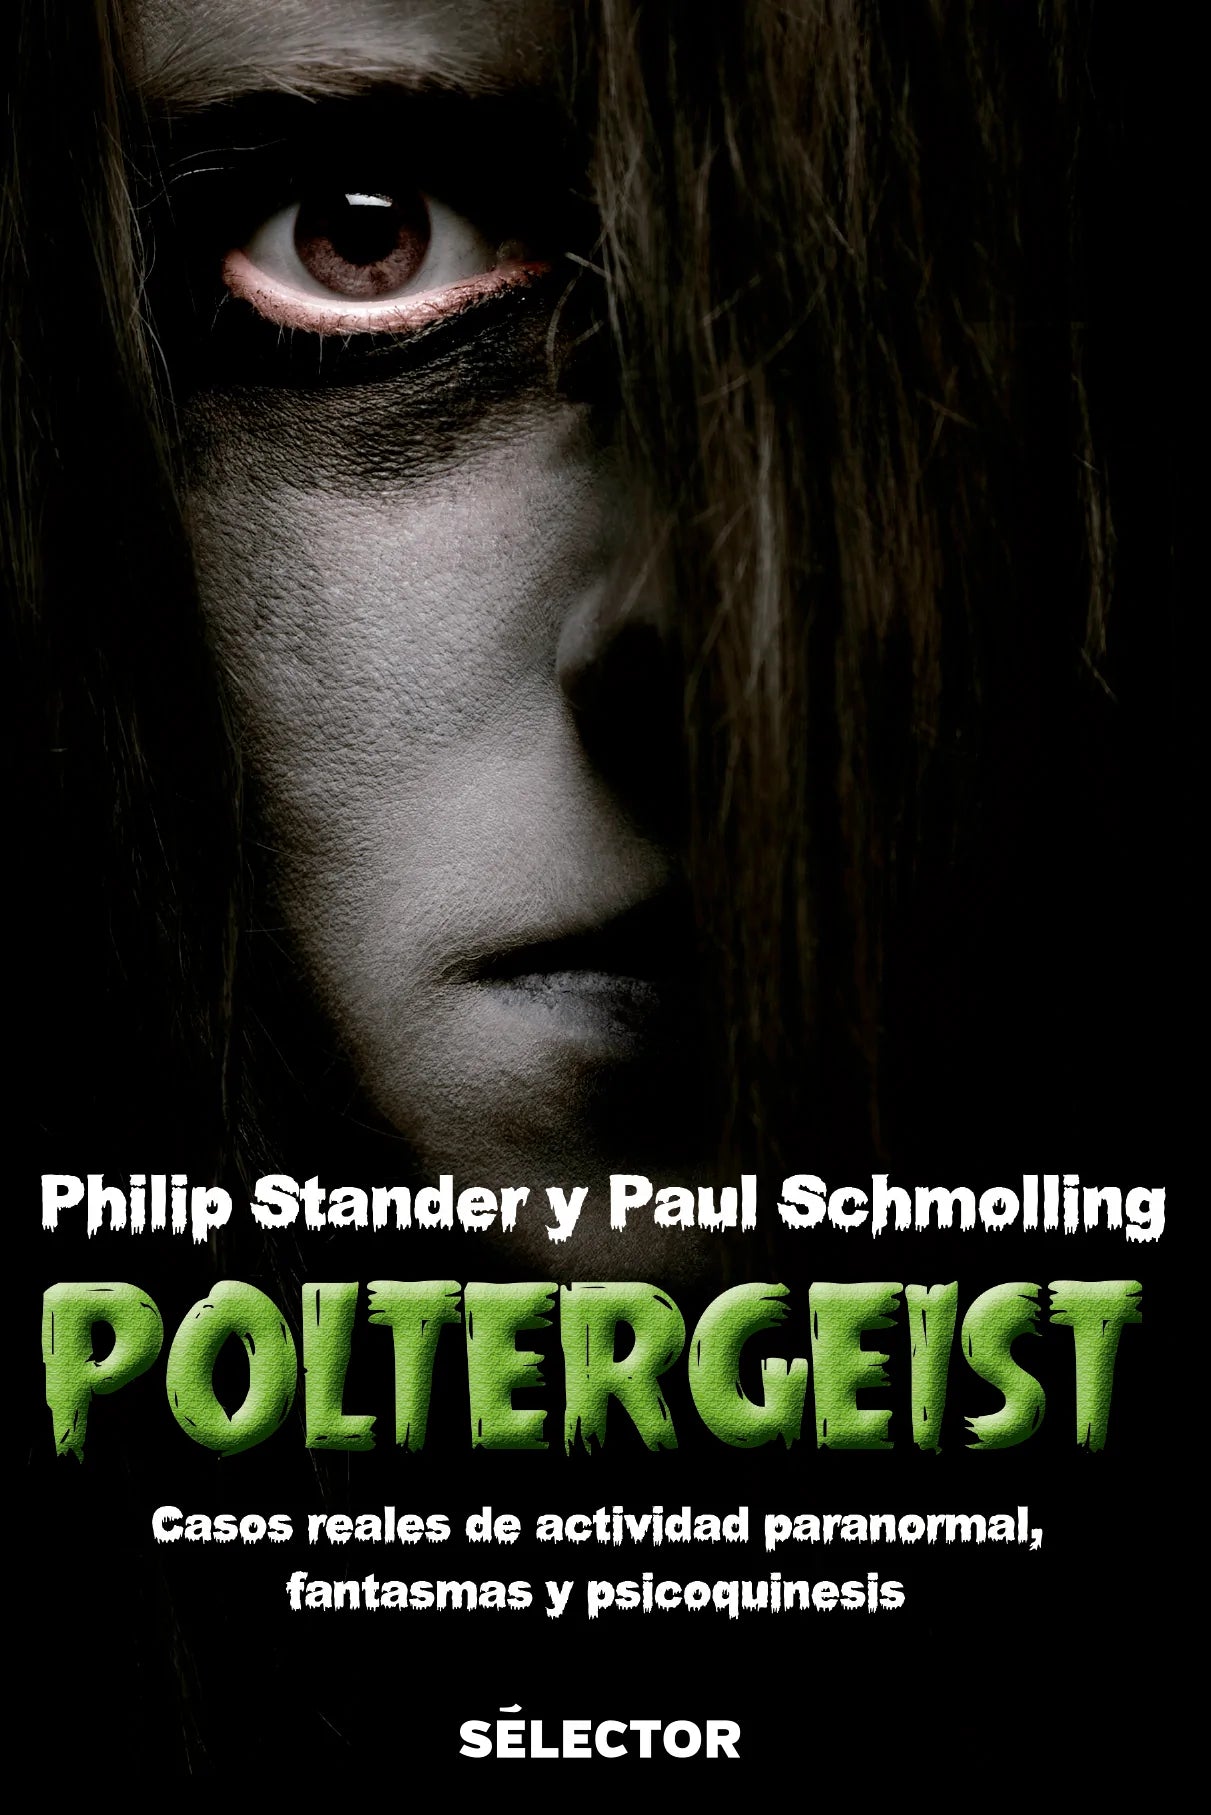 Poltergeist - Editorial Selector